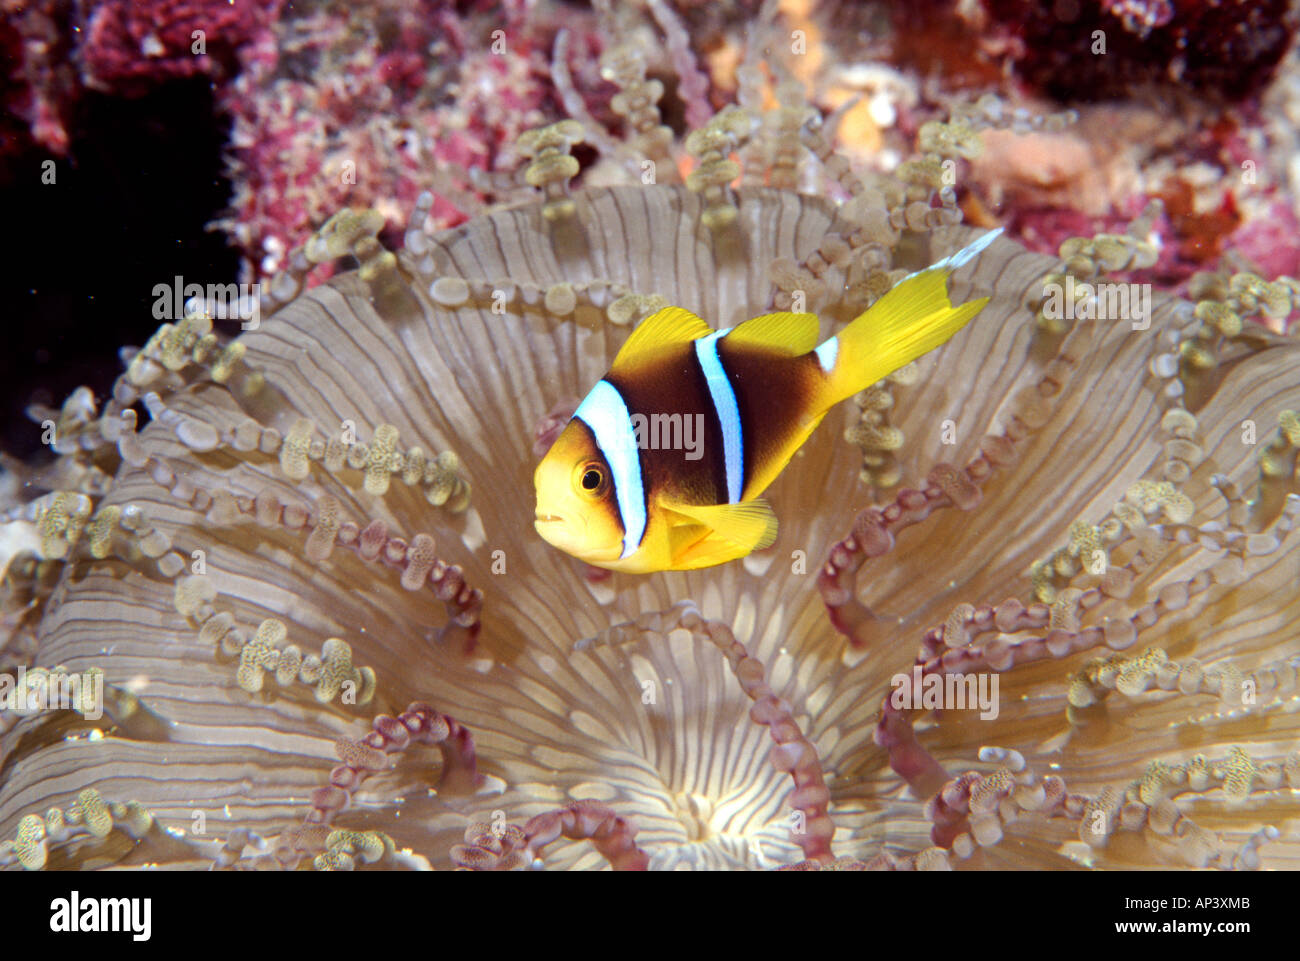 Orange-fin Anemonefish in Beaded Sea Anemone Stock Photo